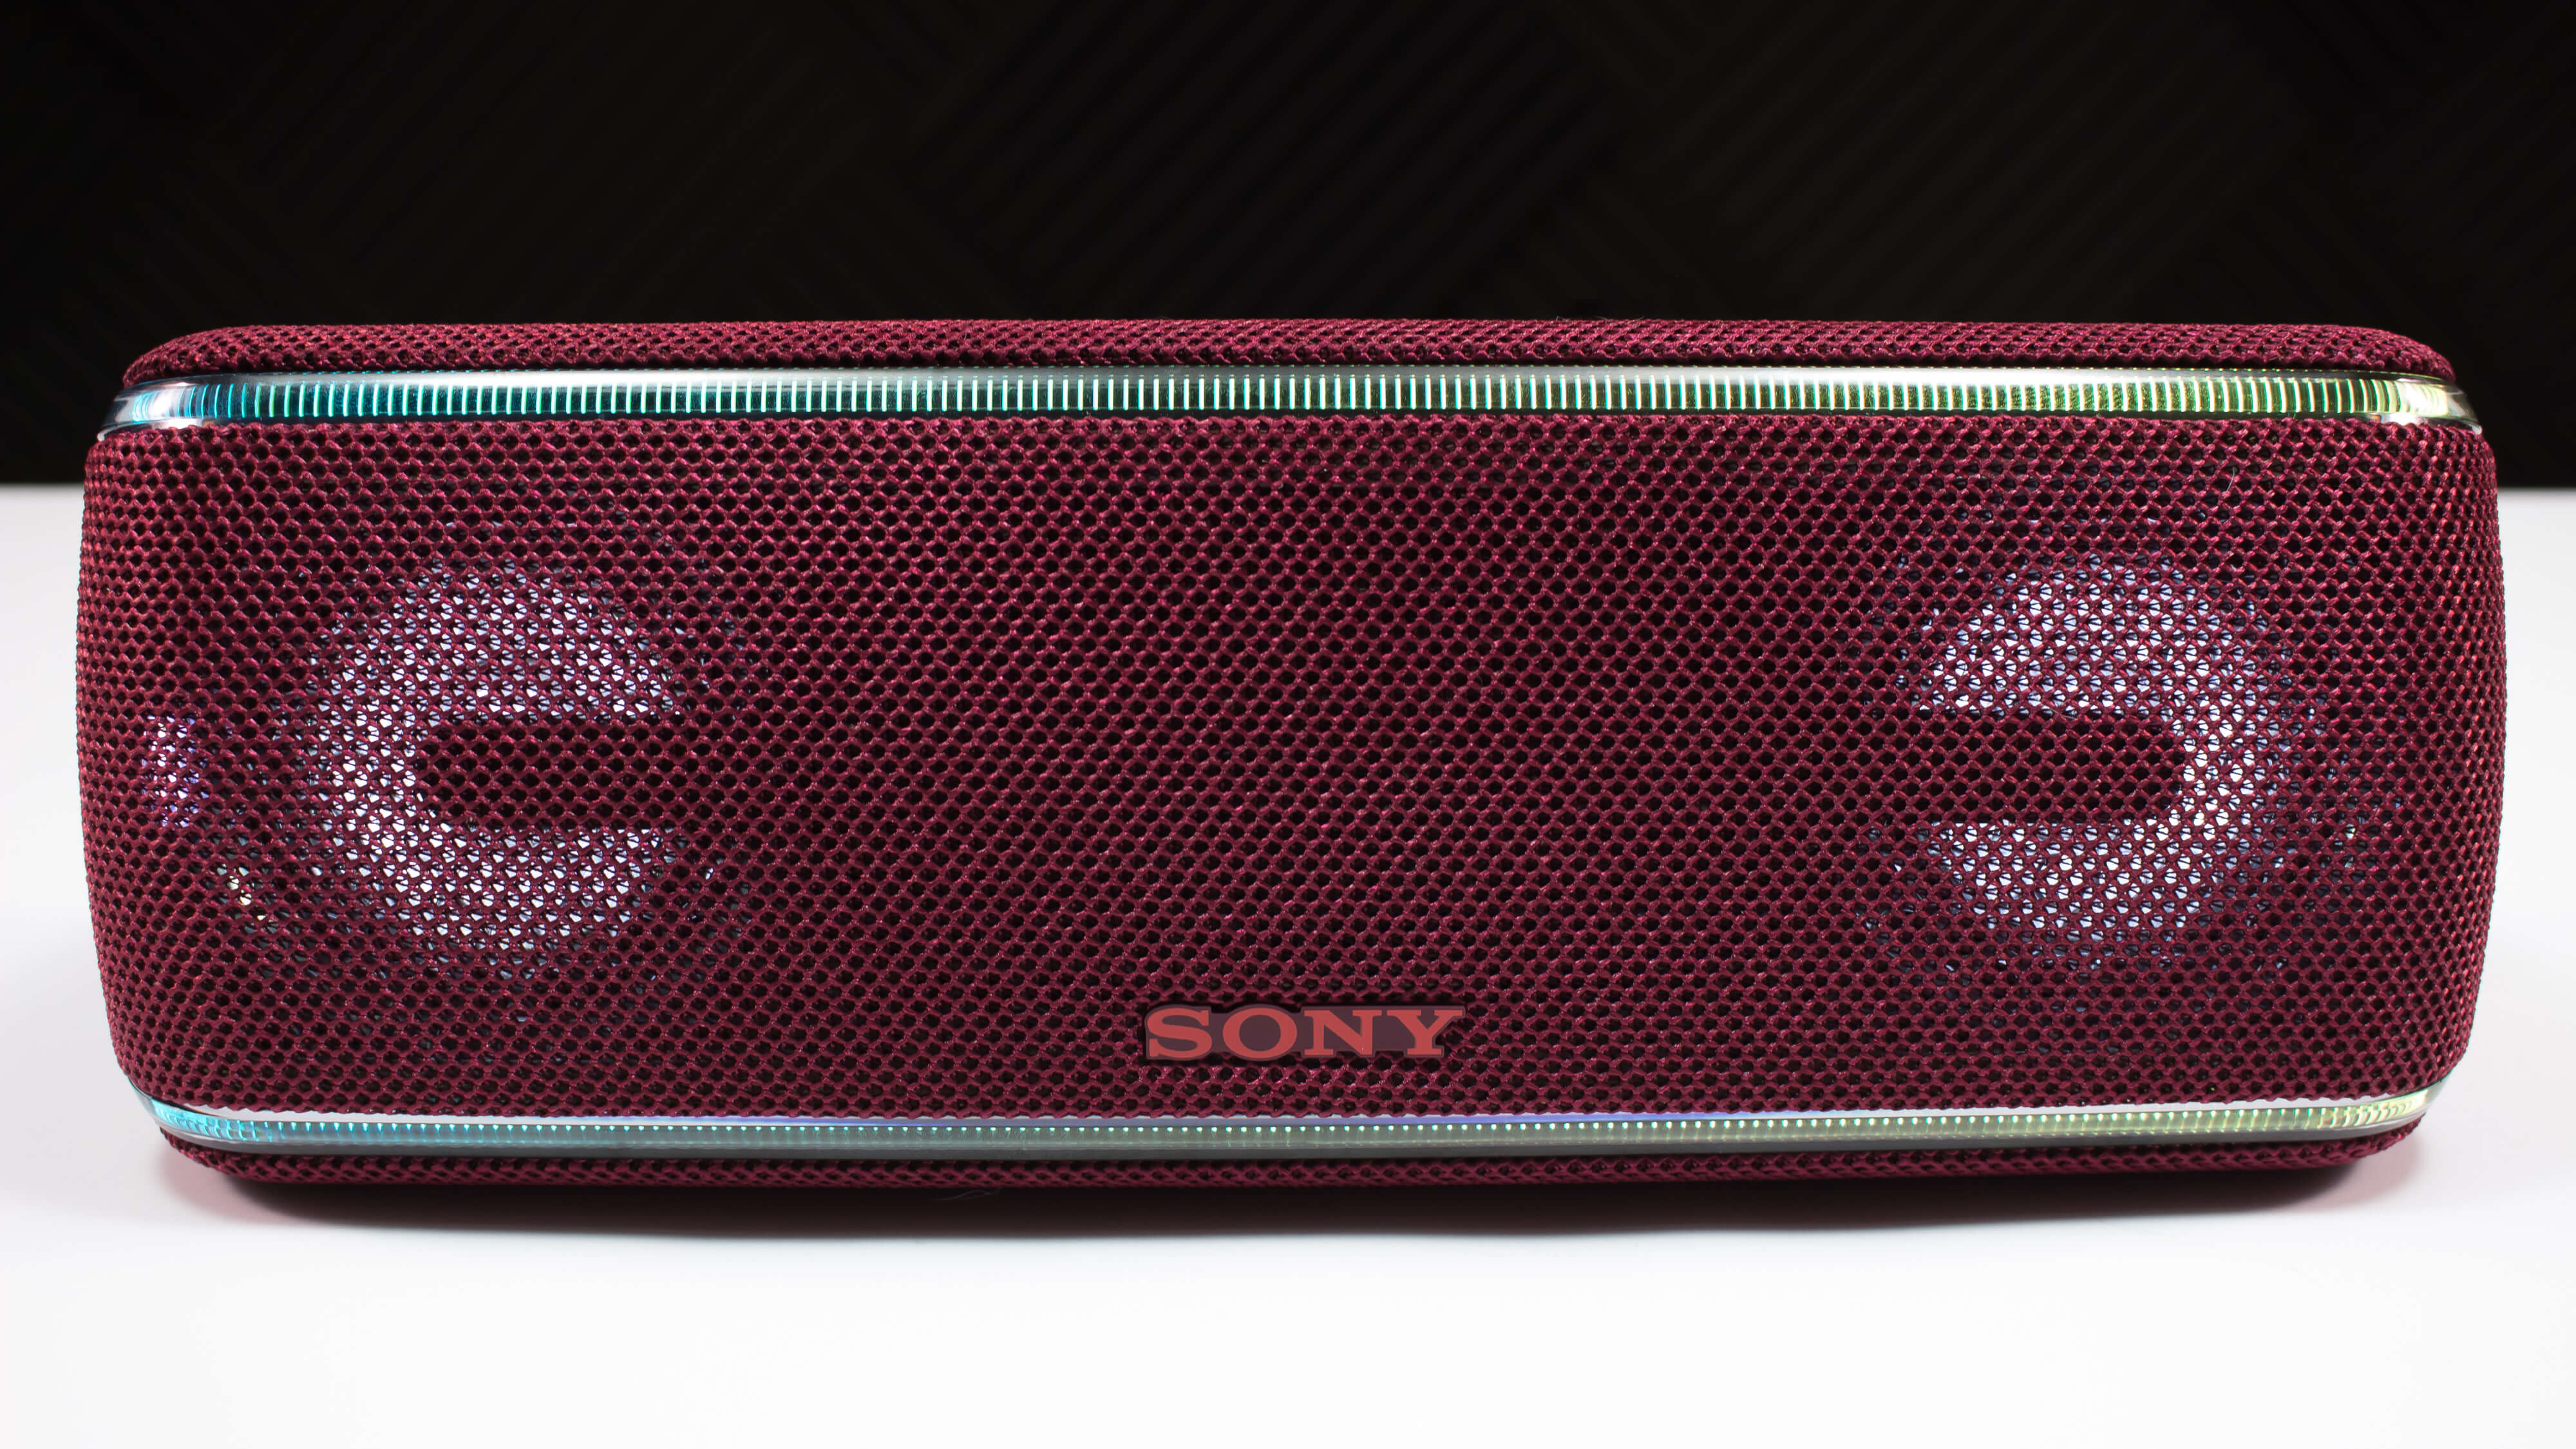 Sony Extra Bass XB41 Portable Speaker Review - Samma3a Tech